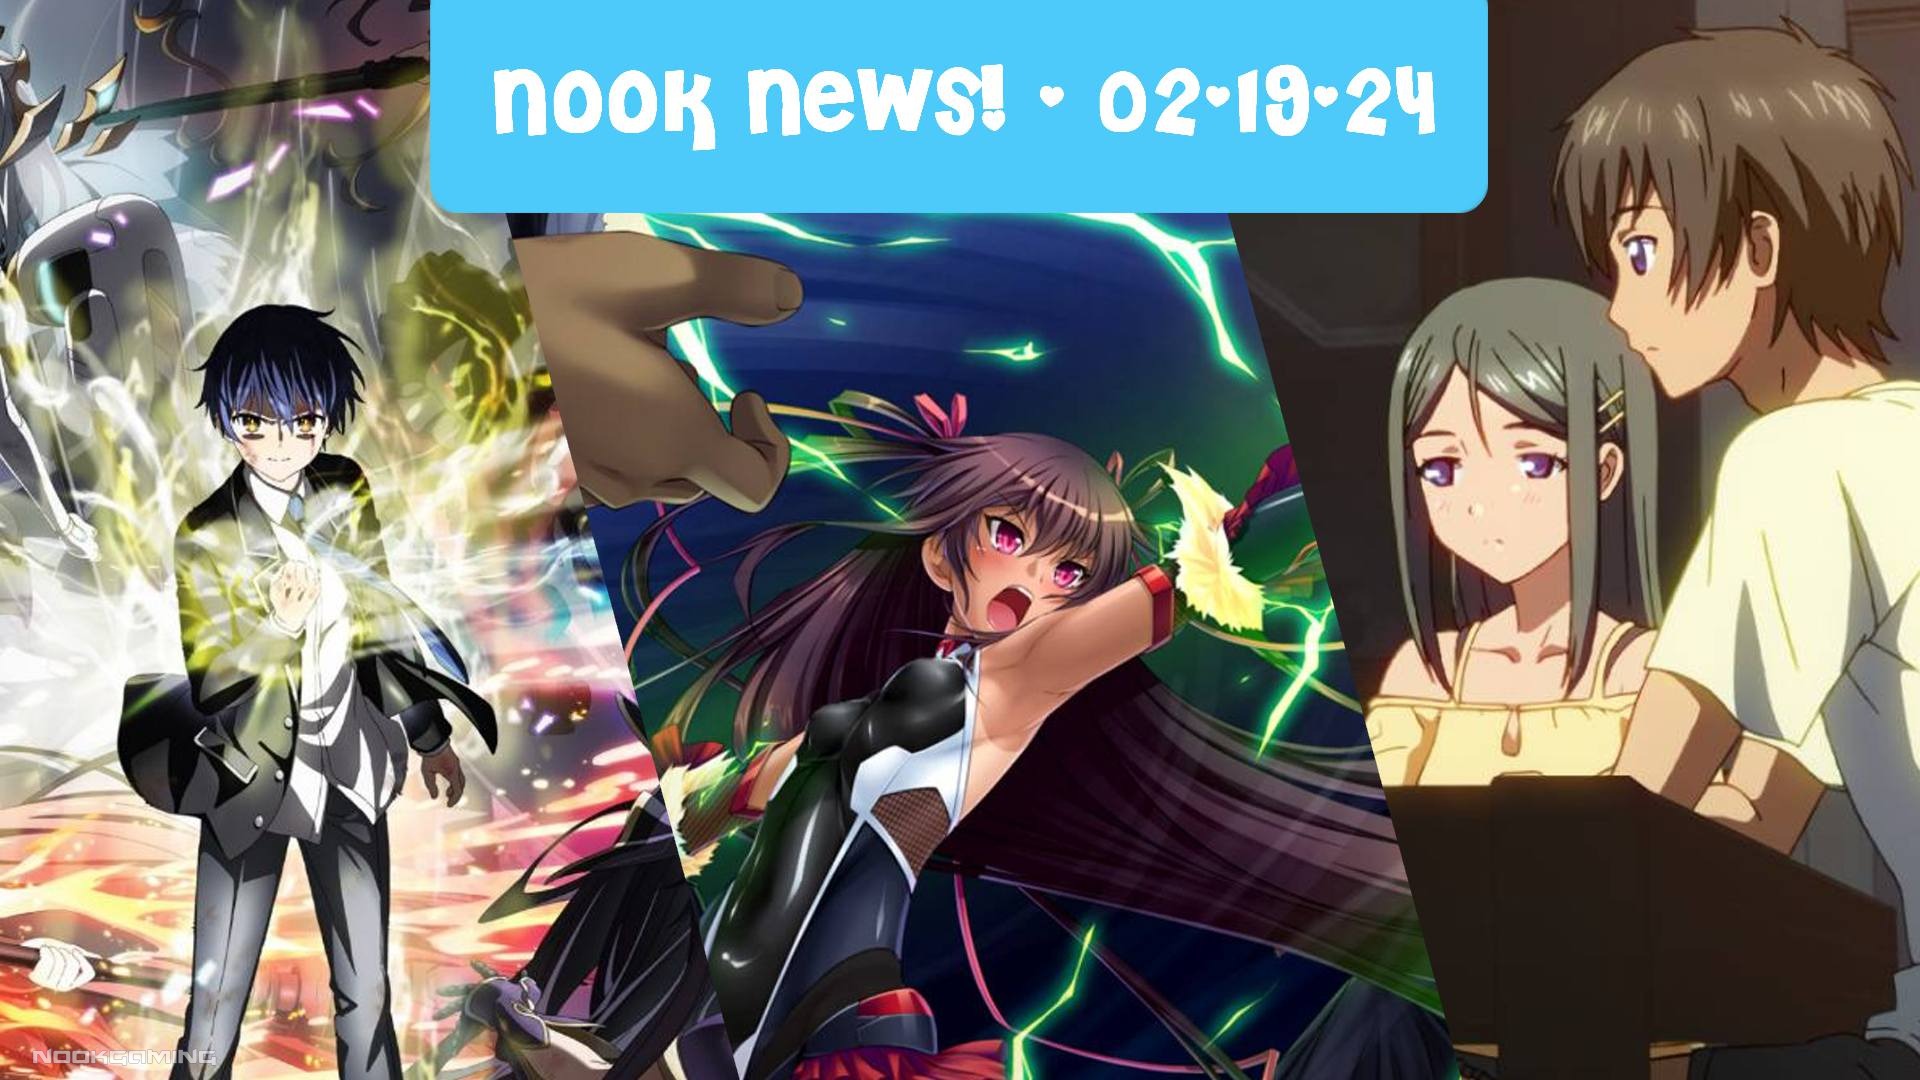 Nook News – 2/19/24 | 3 Years of Nook News!